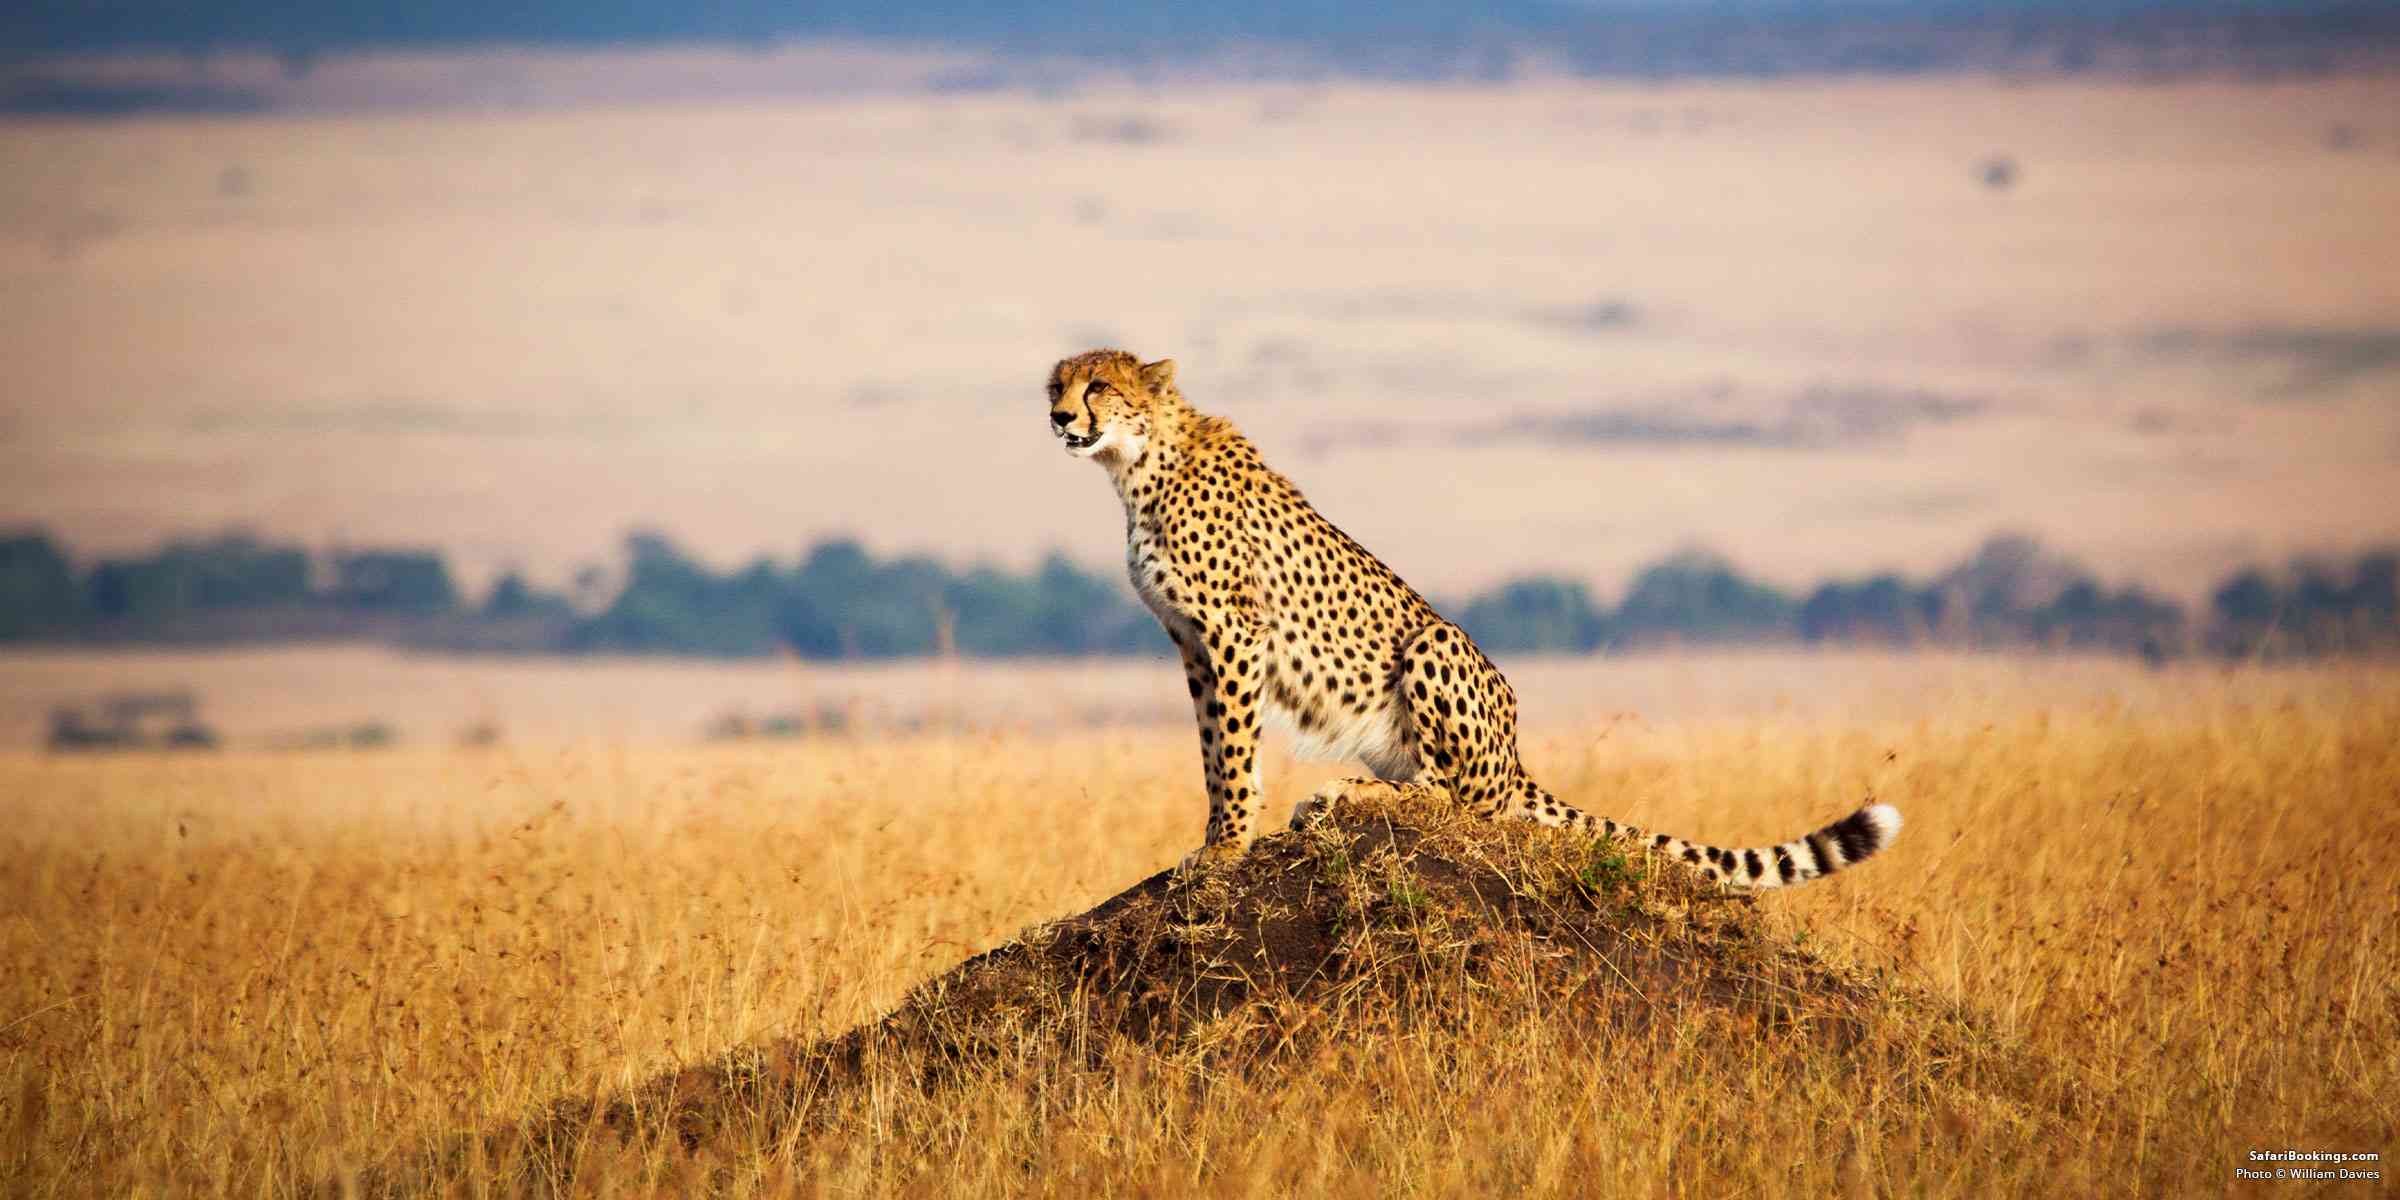 10 Things to Avoid on Safari